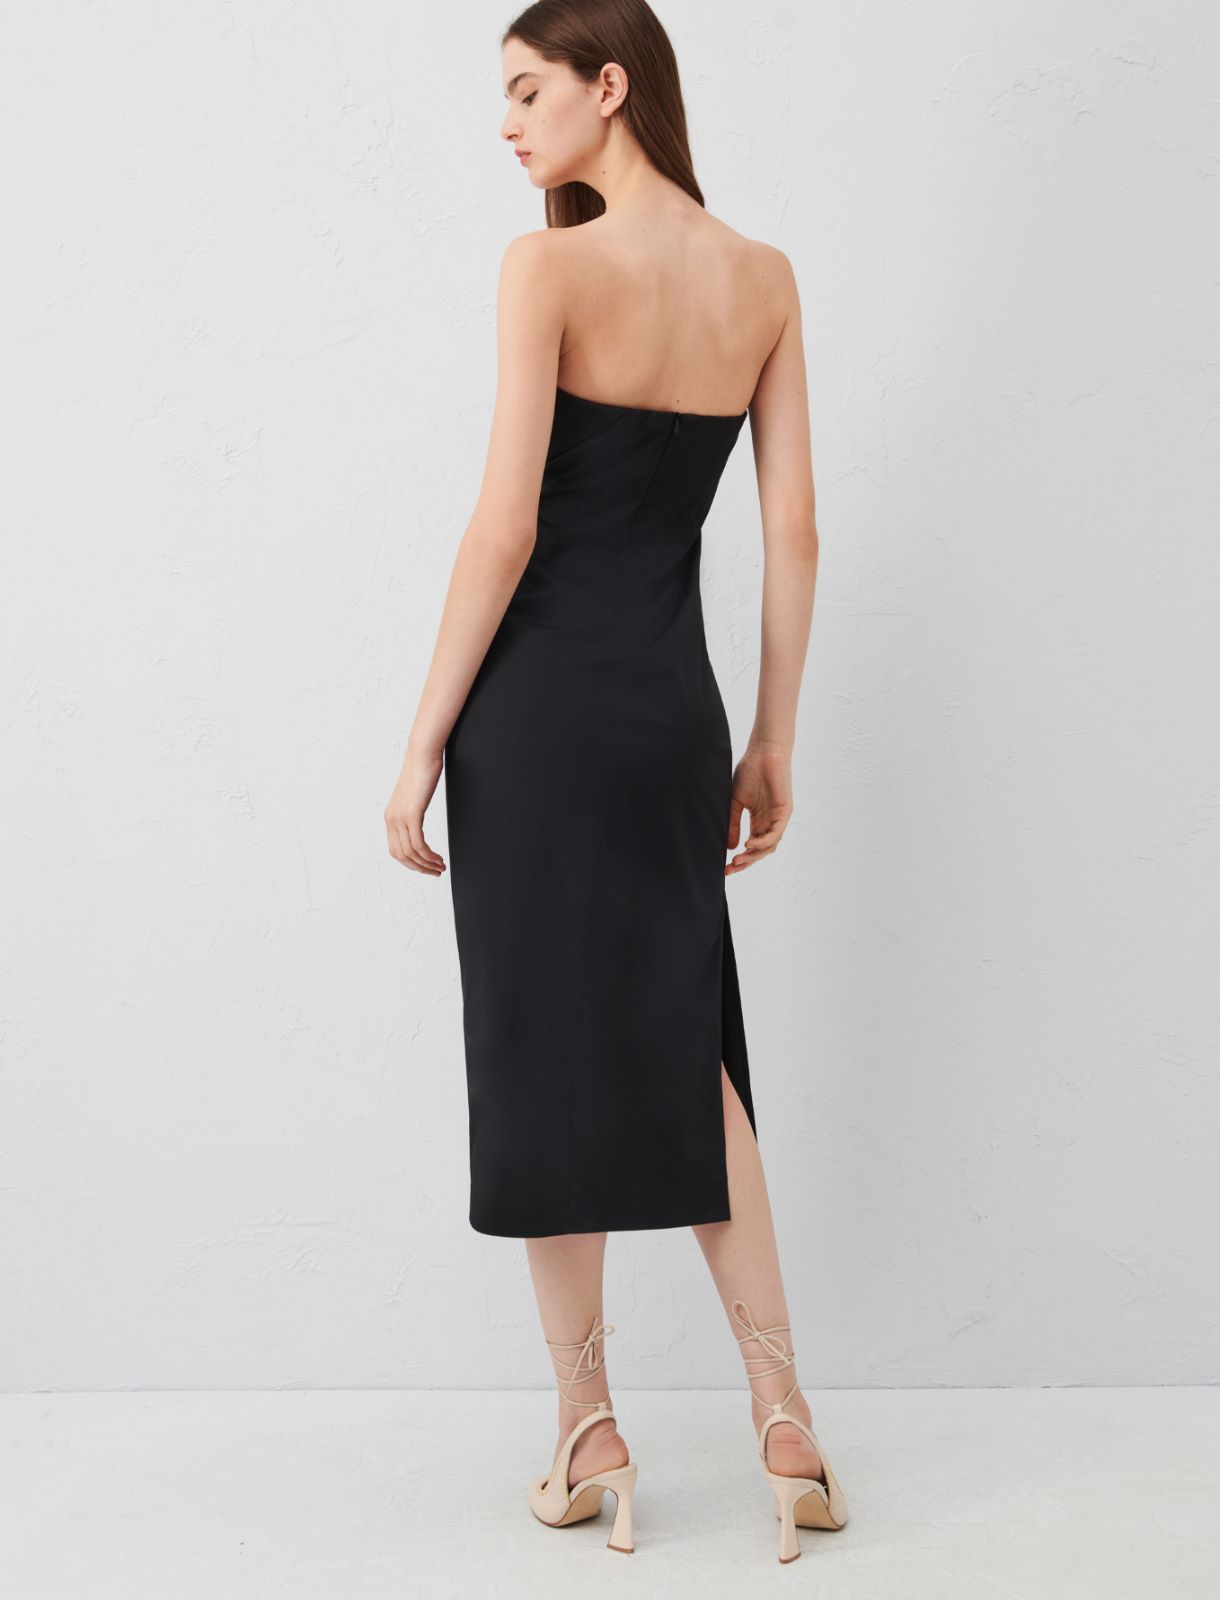 Bustier dress, black | Marella